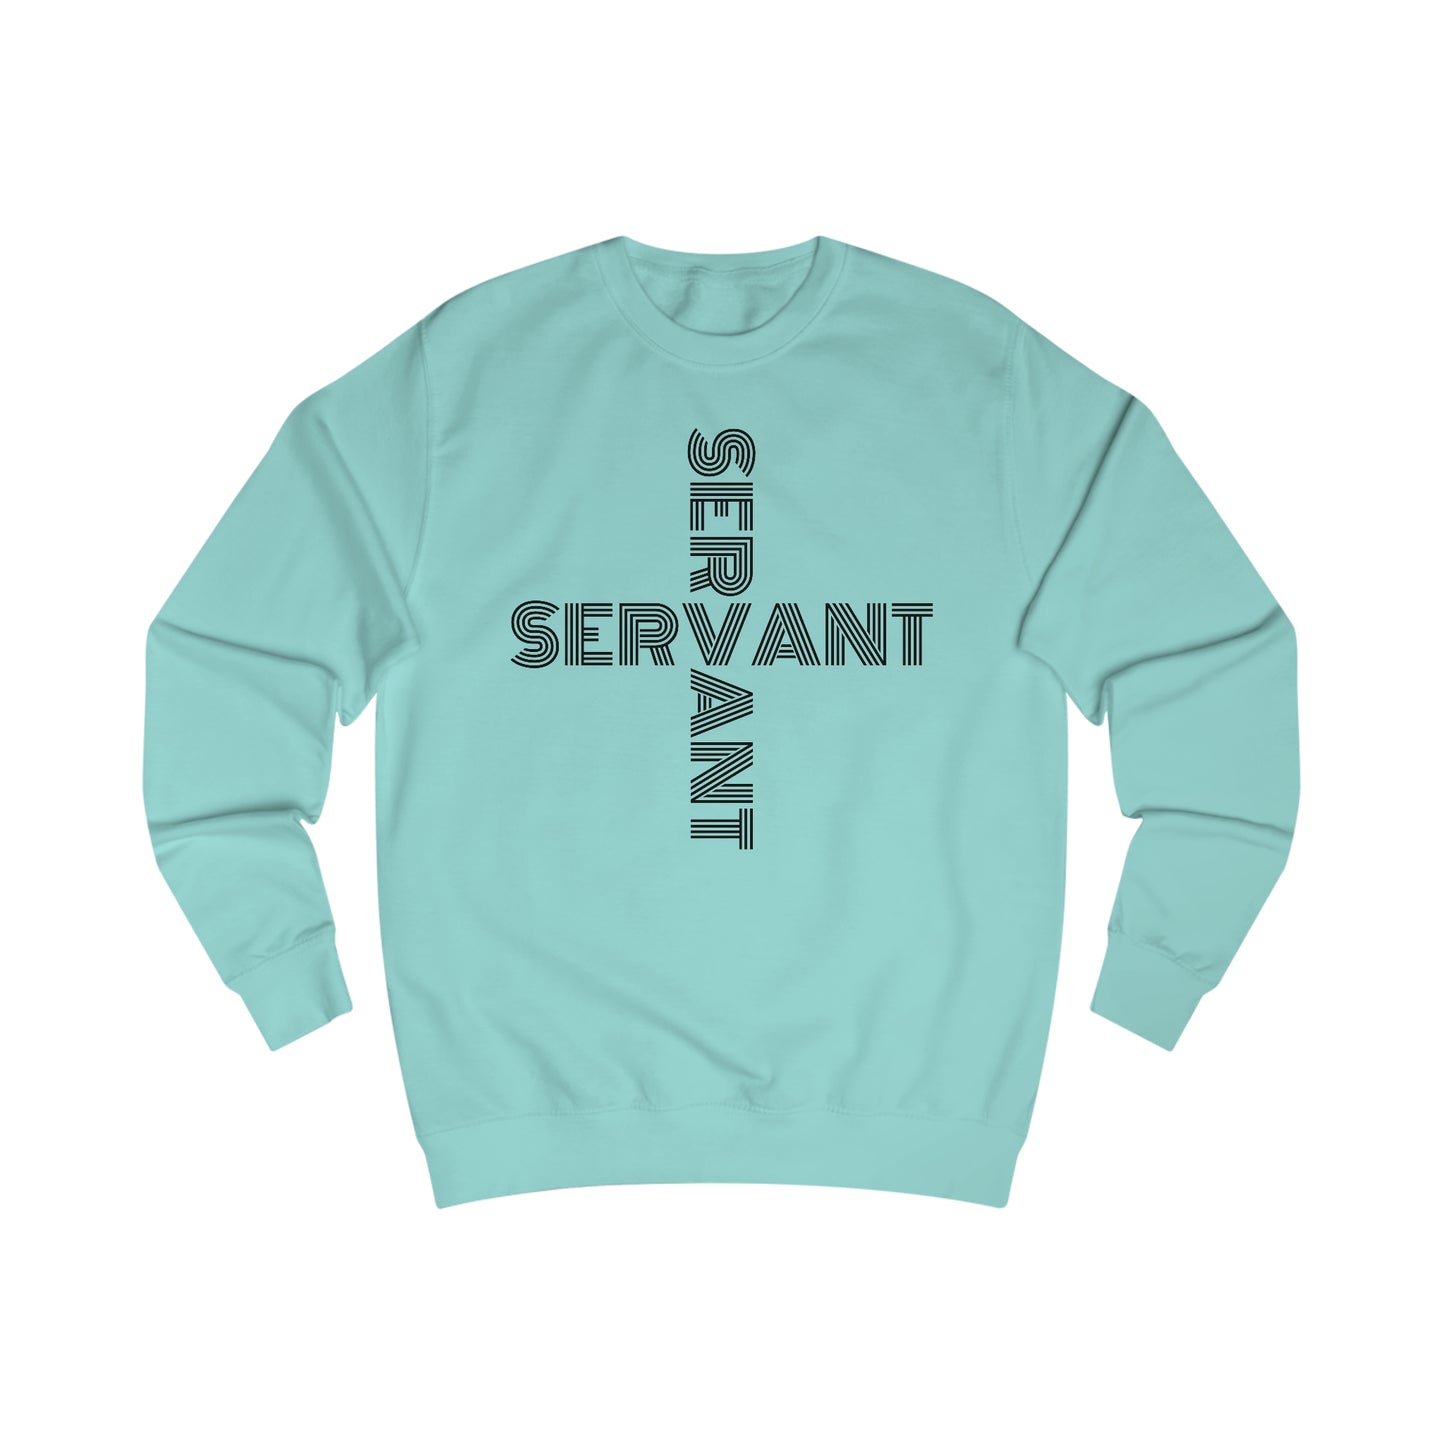 "SERVANT" Sweatshirt